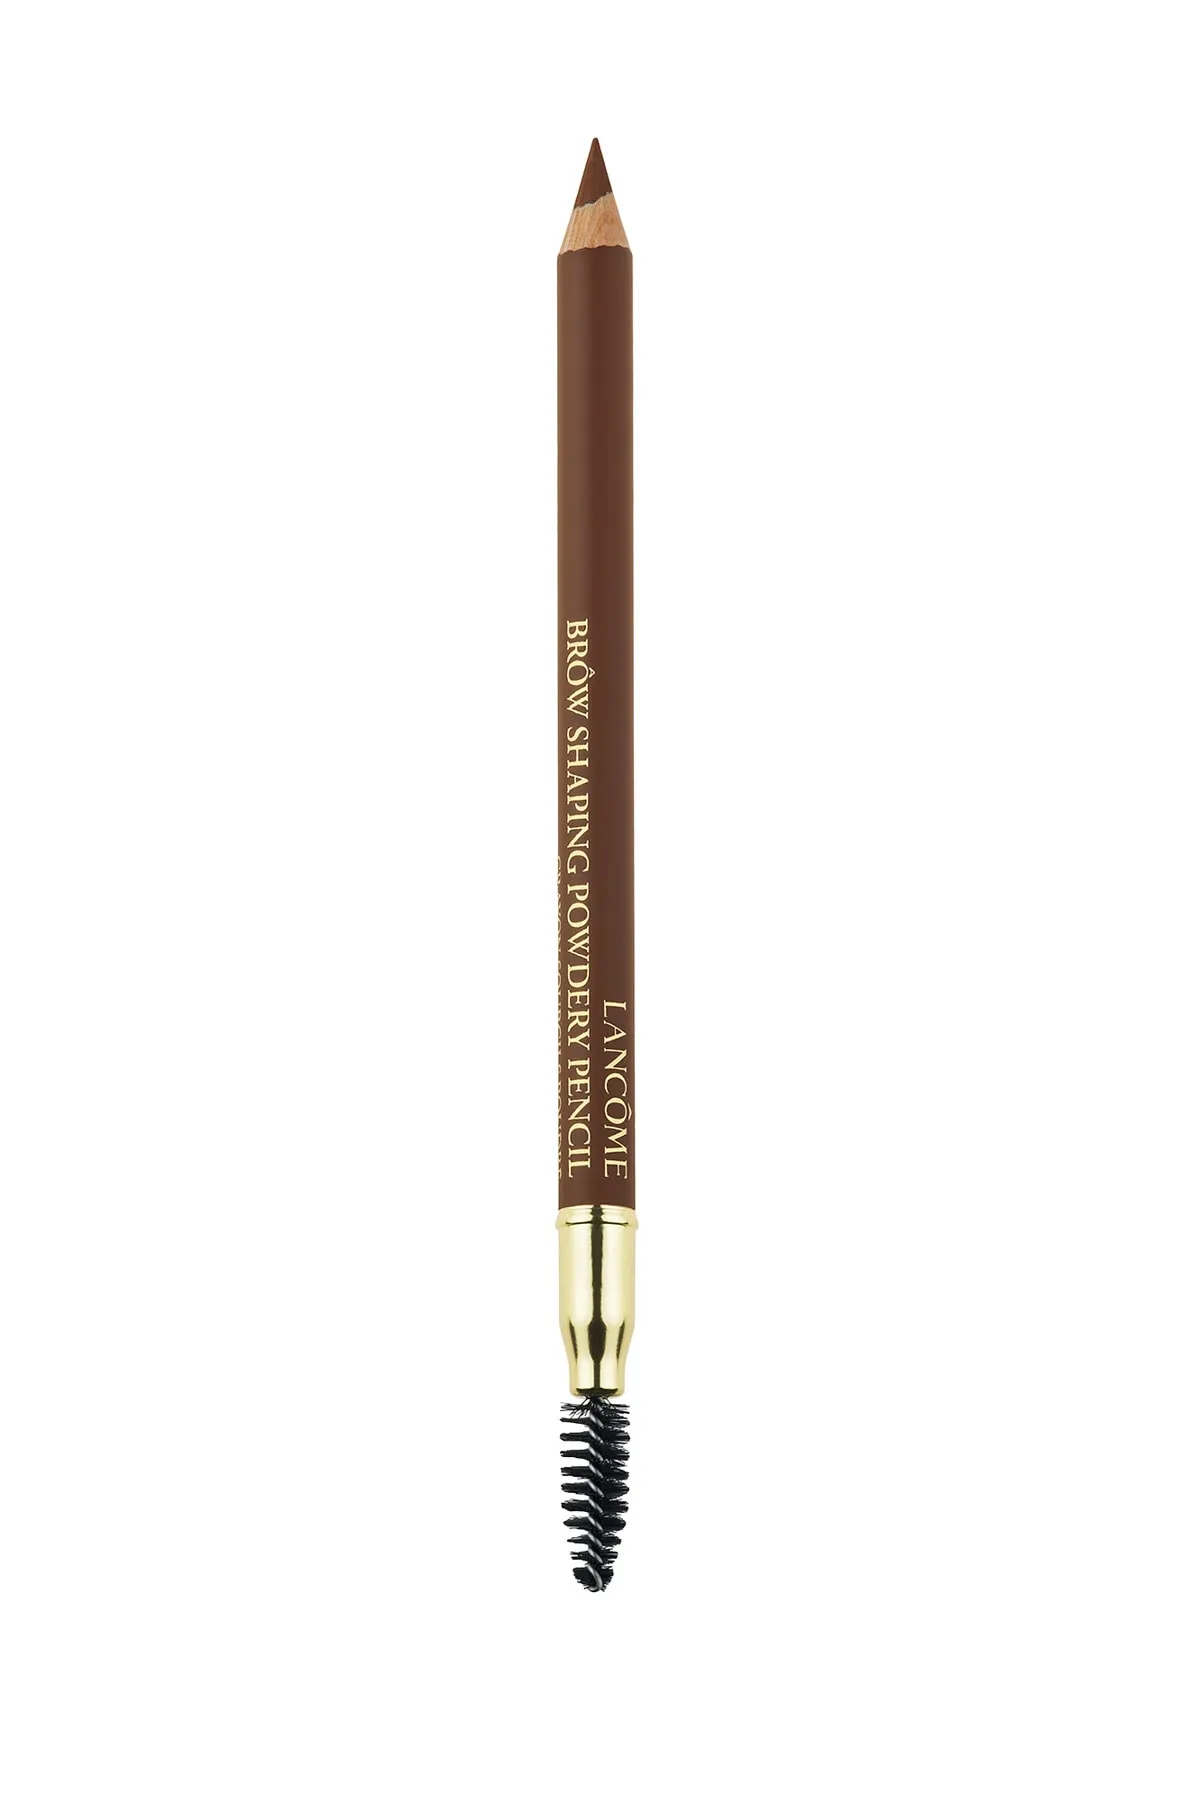 Lancome Brow Shaping Powdery Pencil Kaş Kalemi 05 Chetsnut - 1